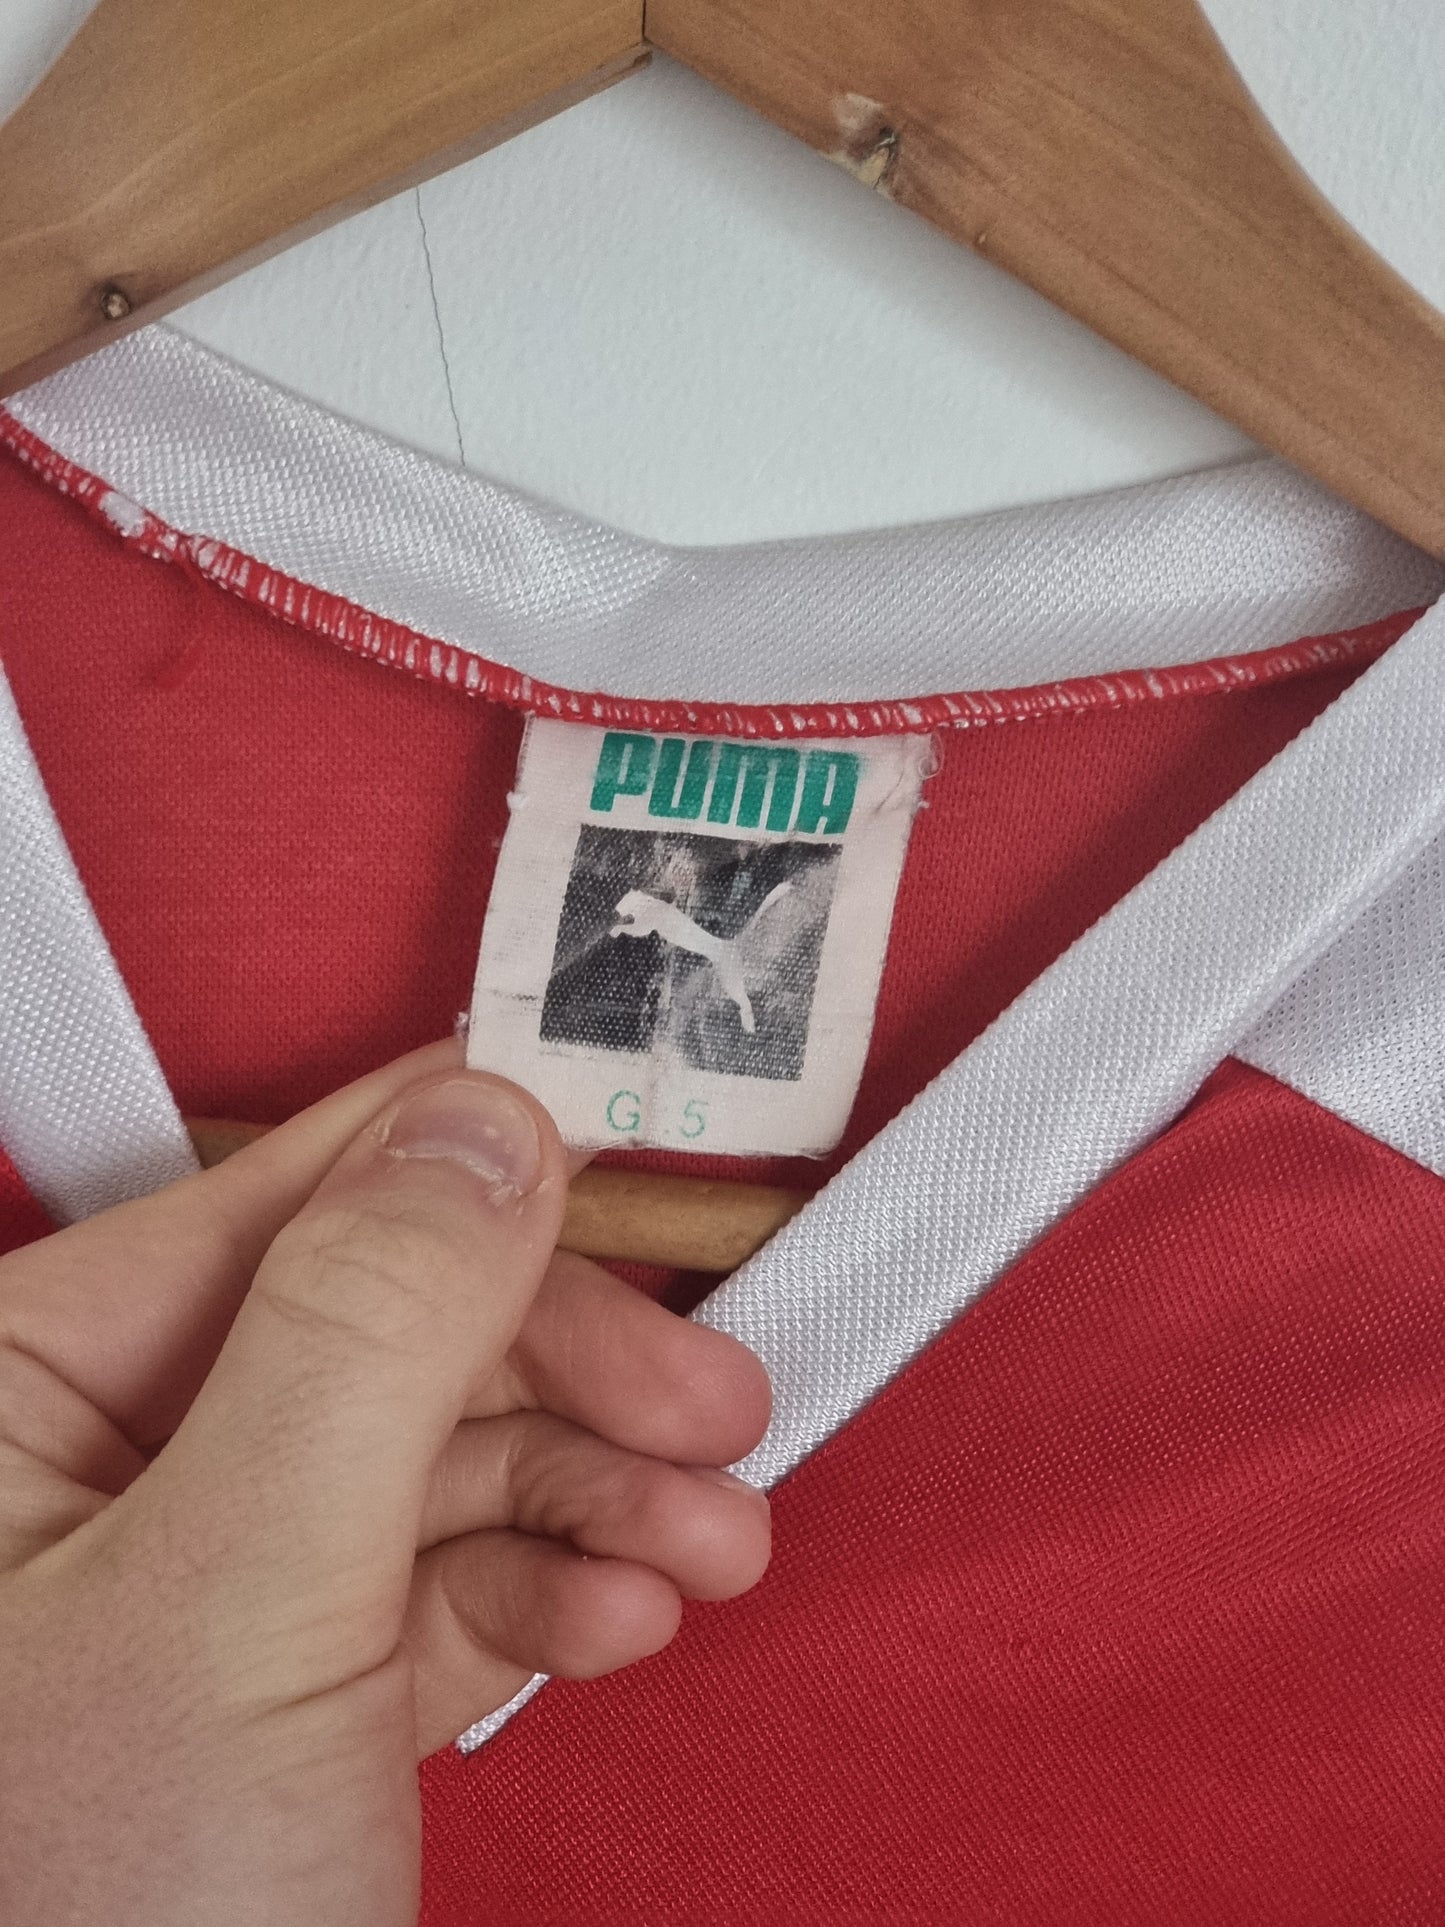 Puma Offenburg School 80s Football Shirt Medium